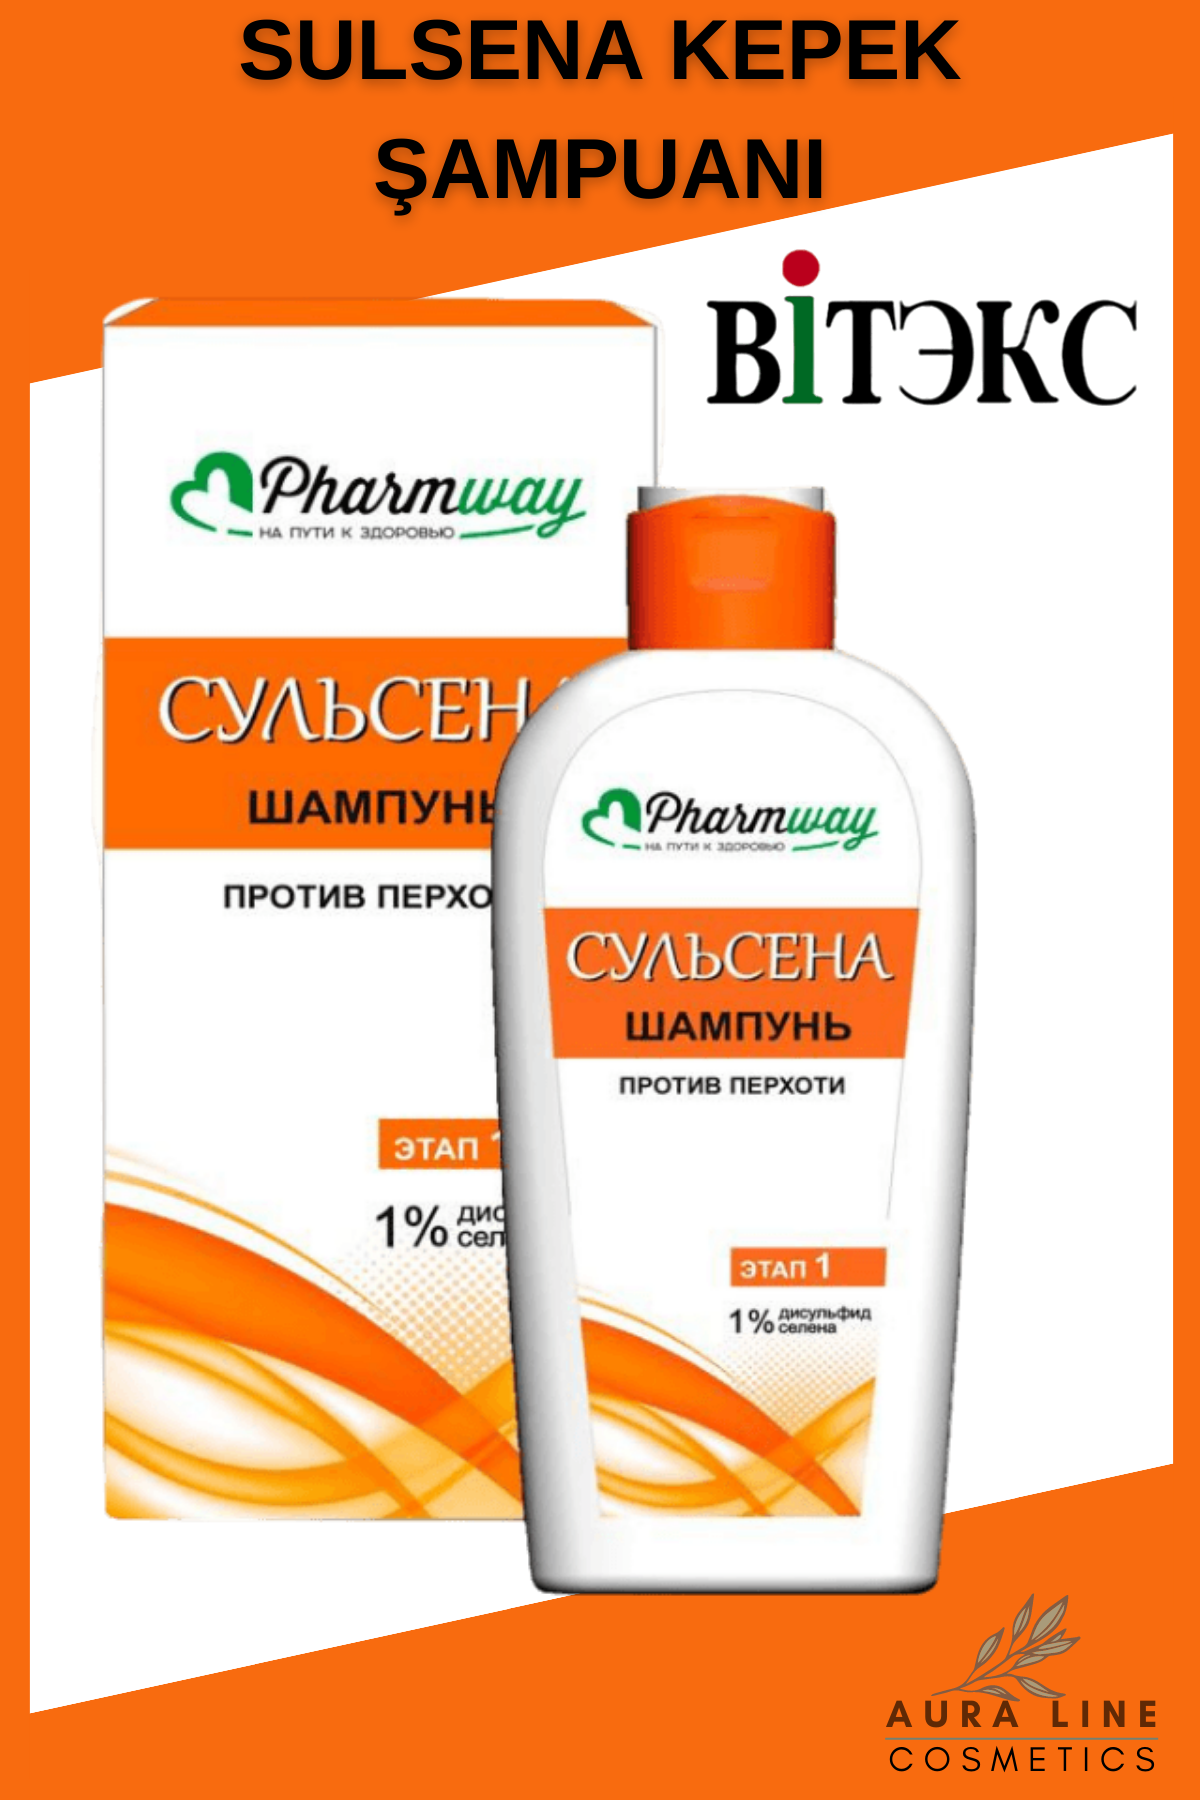 Pharmway SULSENA Antidandruff Kepek Önleyici Şampuan (Selenyum Disülfit %1) | Auraline Cosmetics